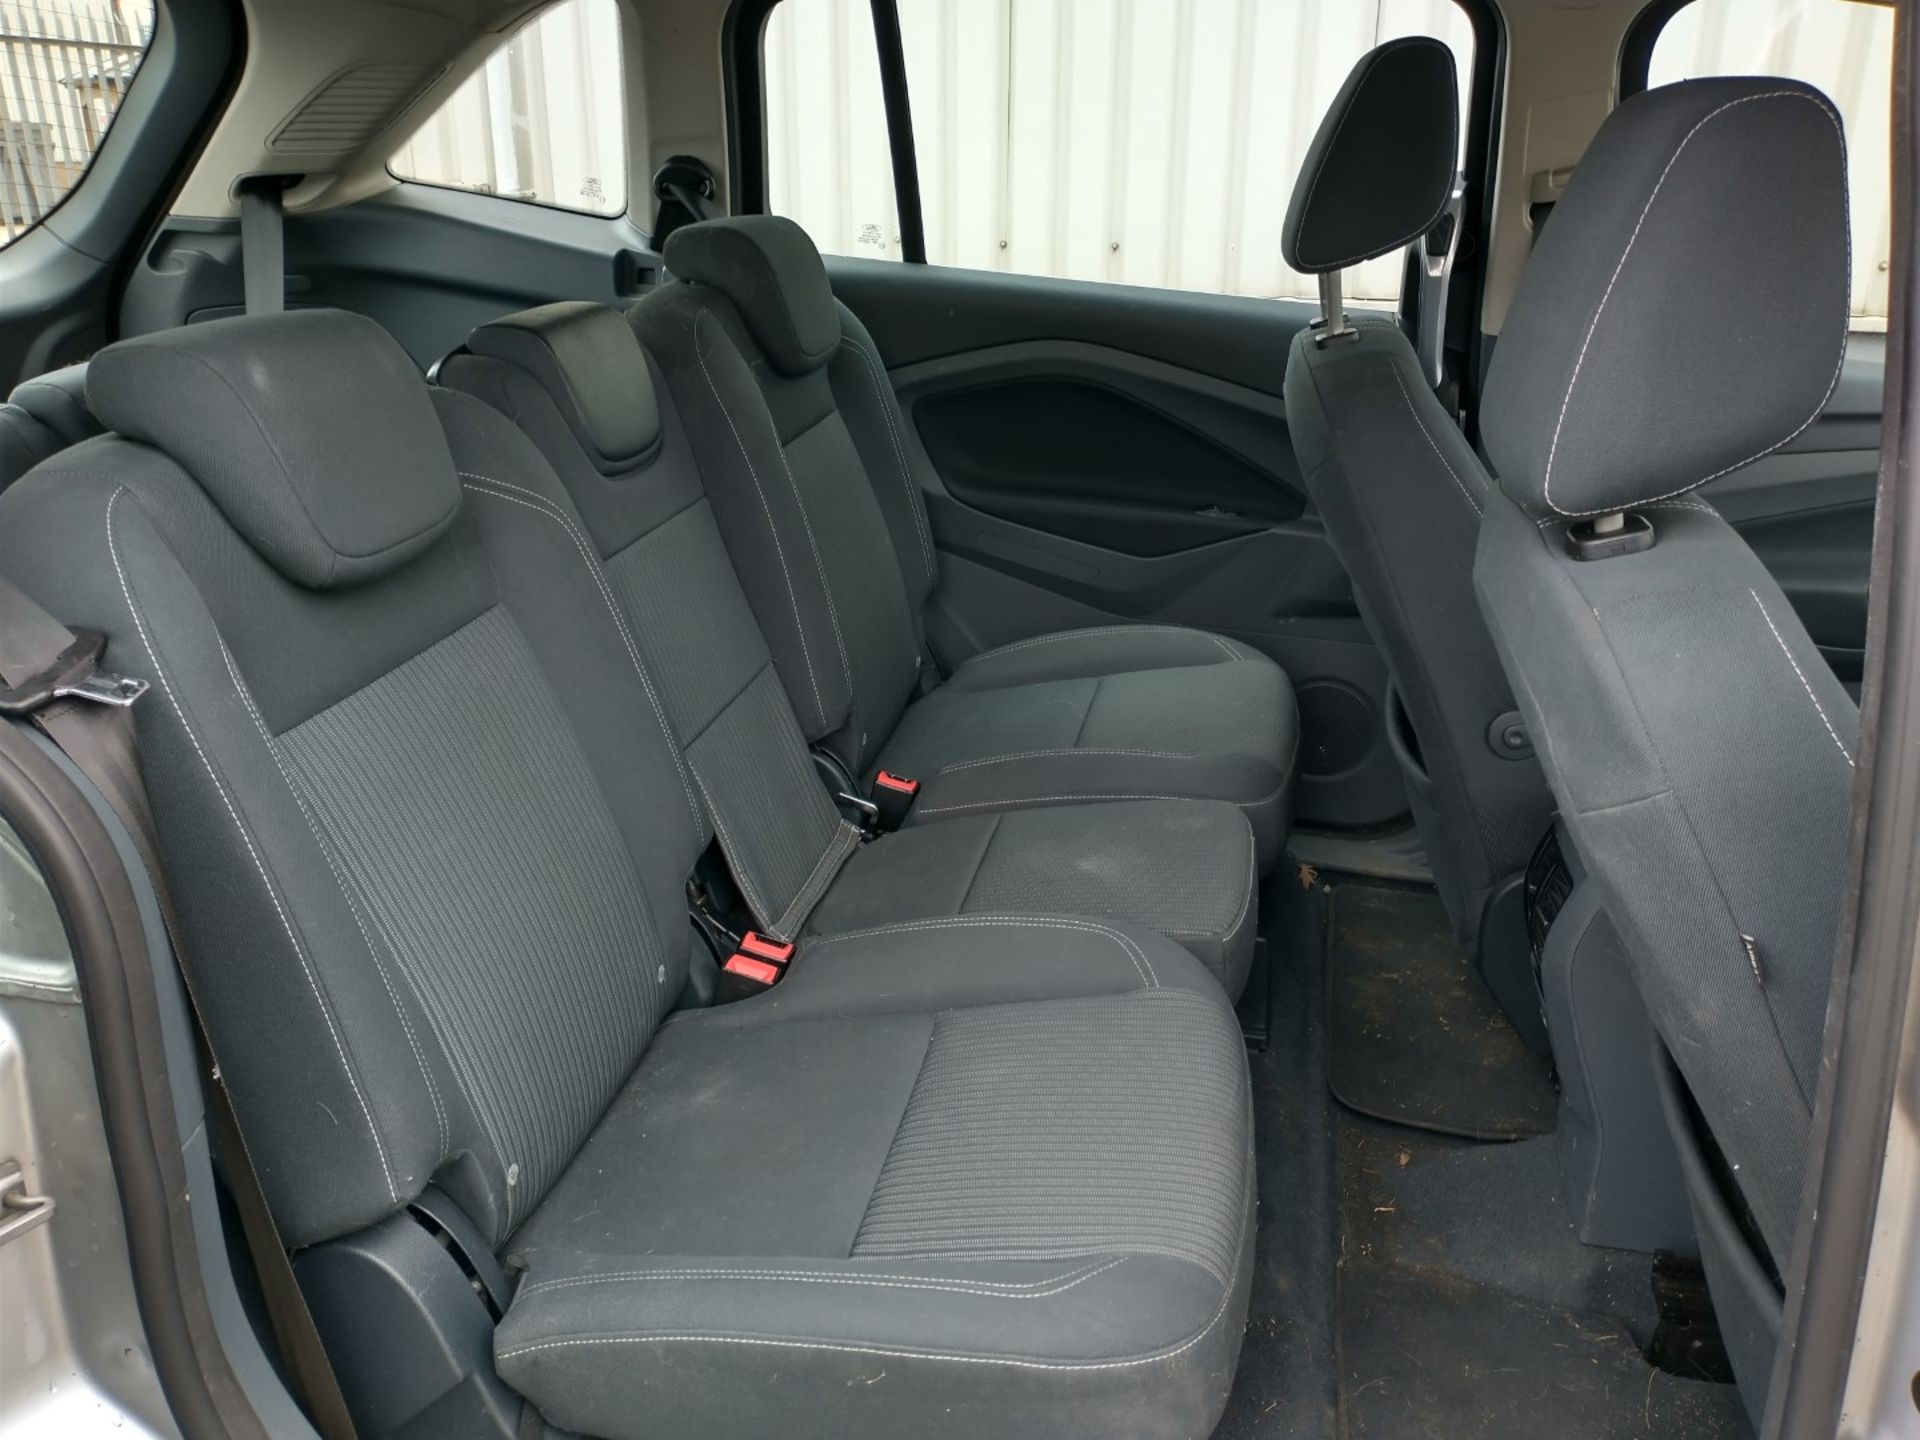 2012 Ford Grand C-Max Titanium Tdci 115 7 Seat MPV - CL505 - Ref: VVS0002 - NO VAT ON THE HAMMER - L - Image 10 of 24